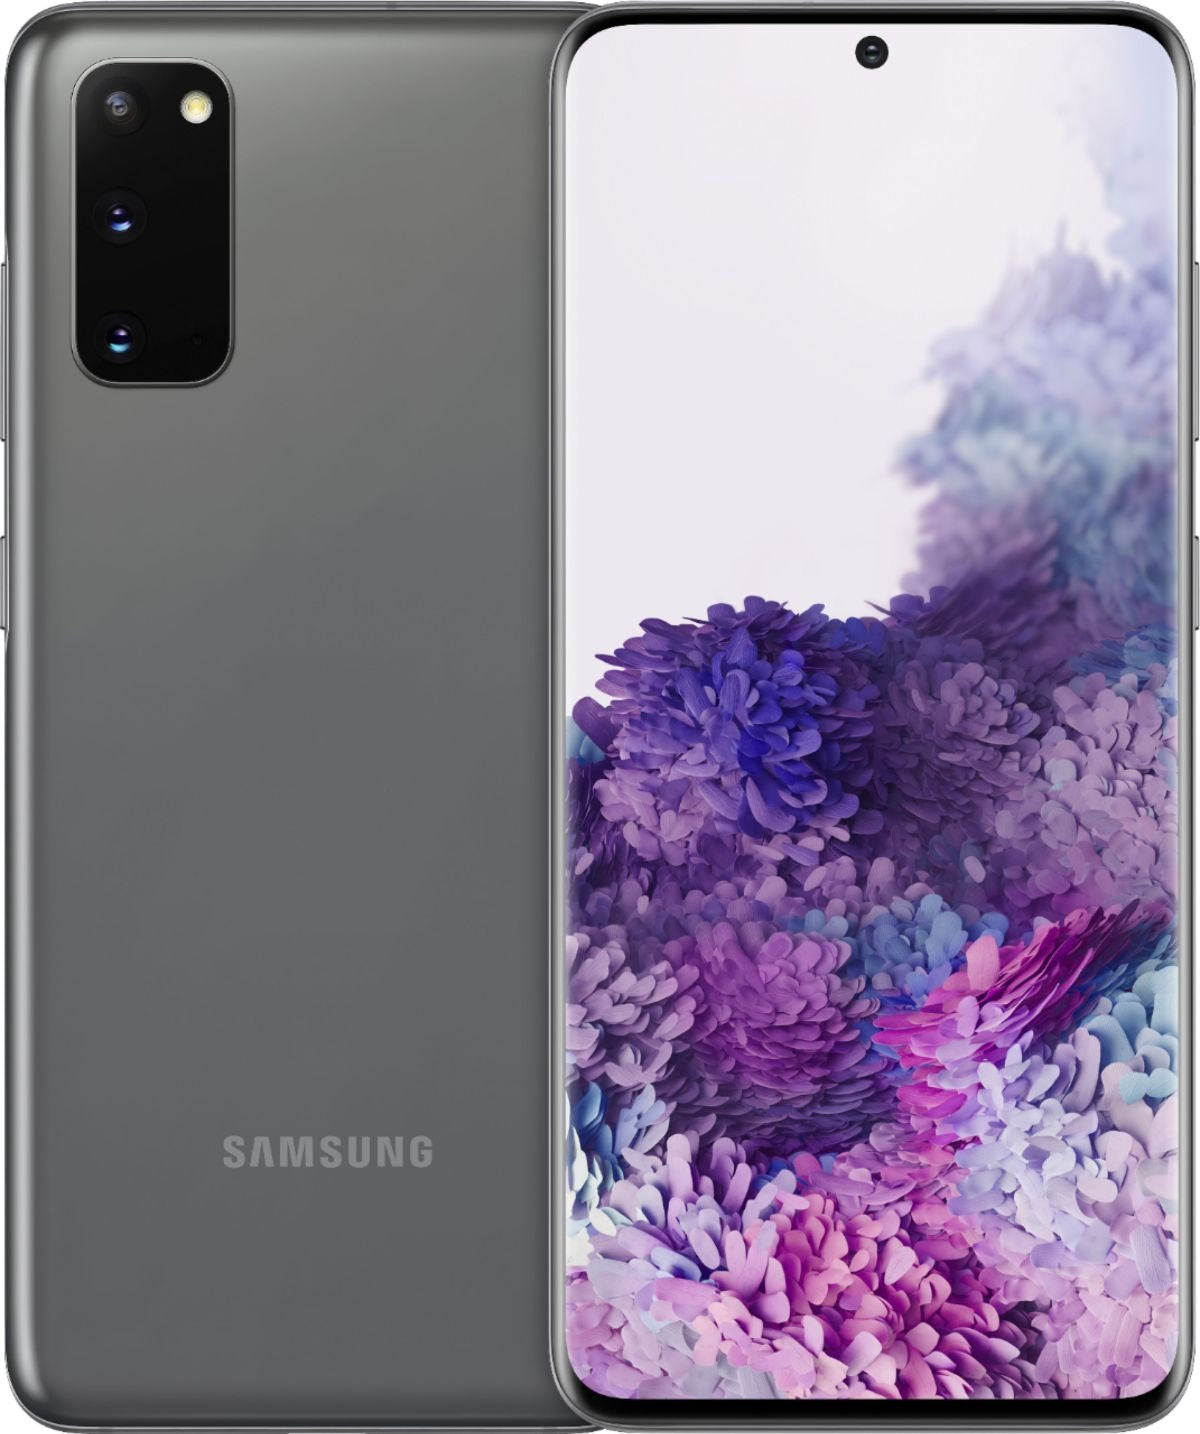 Samsung Galaxy S20 5G -SM-G981U - 128GB -GSM Unlocked Smartphone 10/10